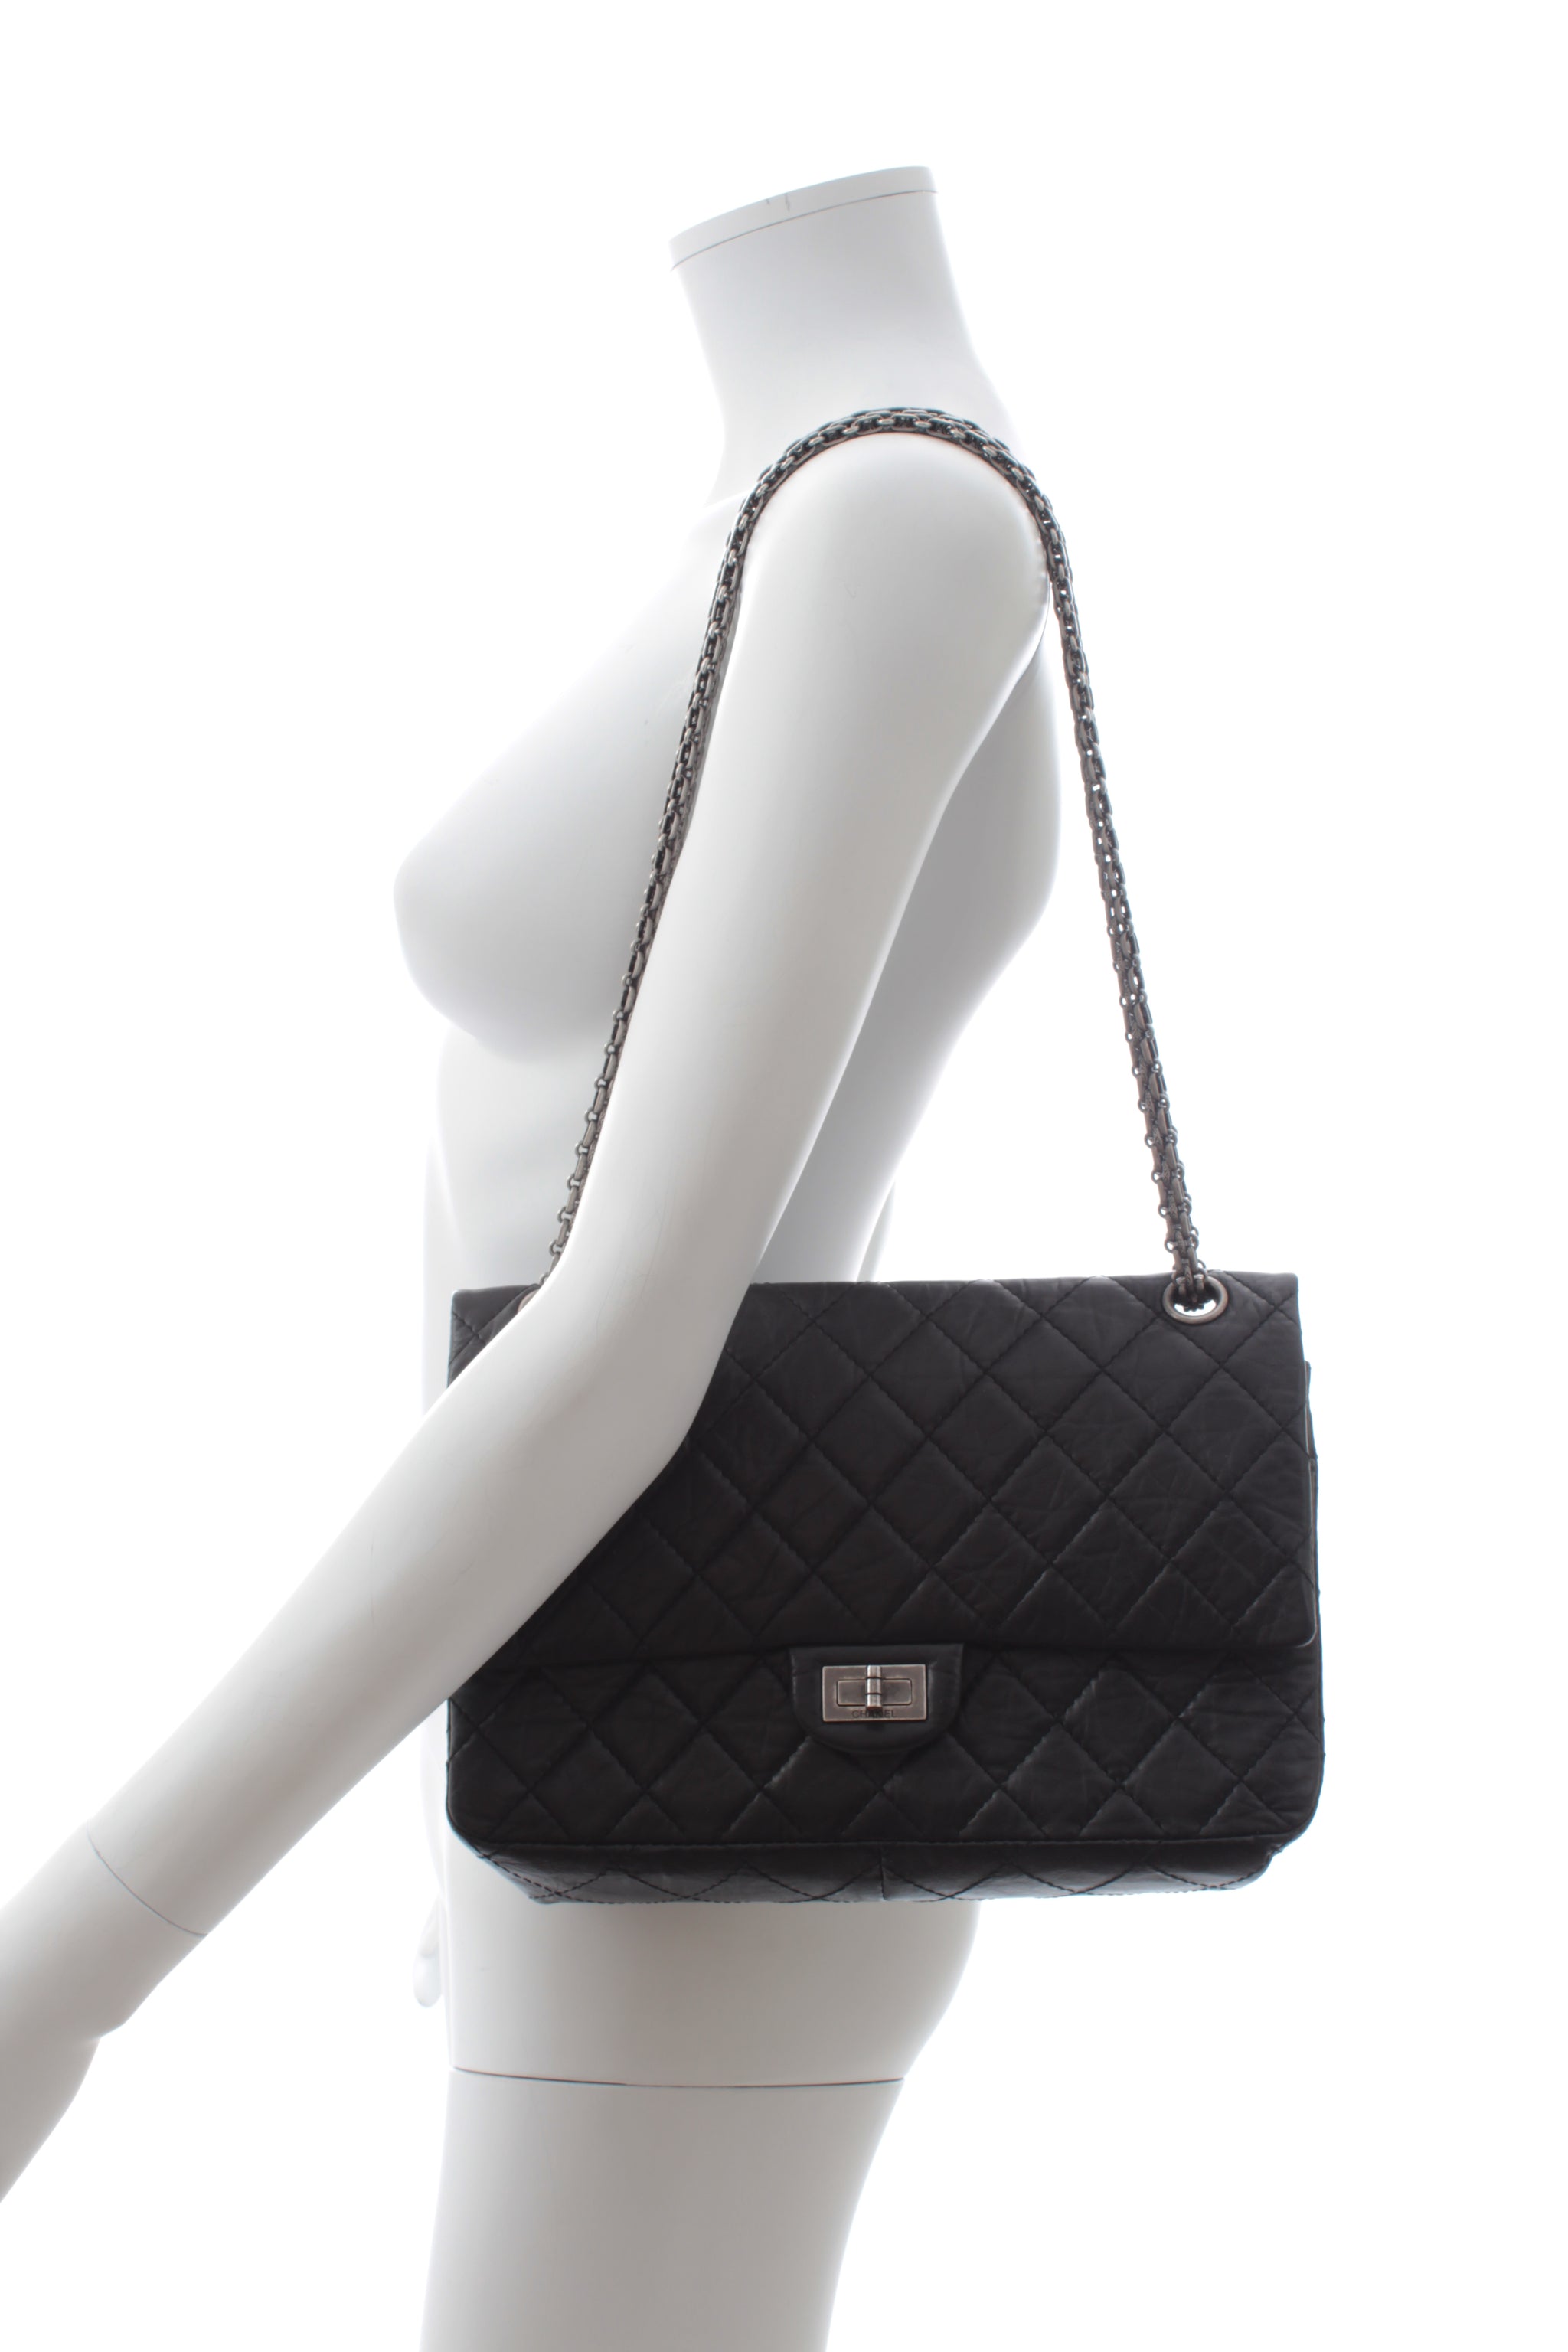 Chanel Large 2.55 Reissue Flap Bag - Closet Upgrade